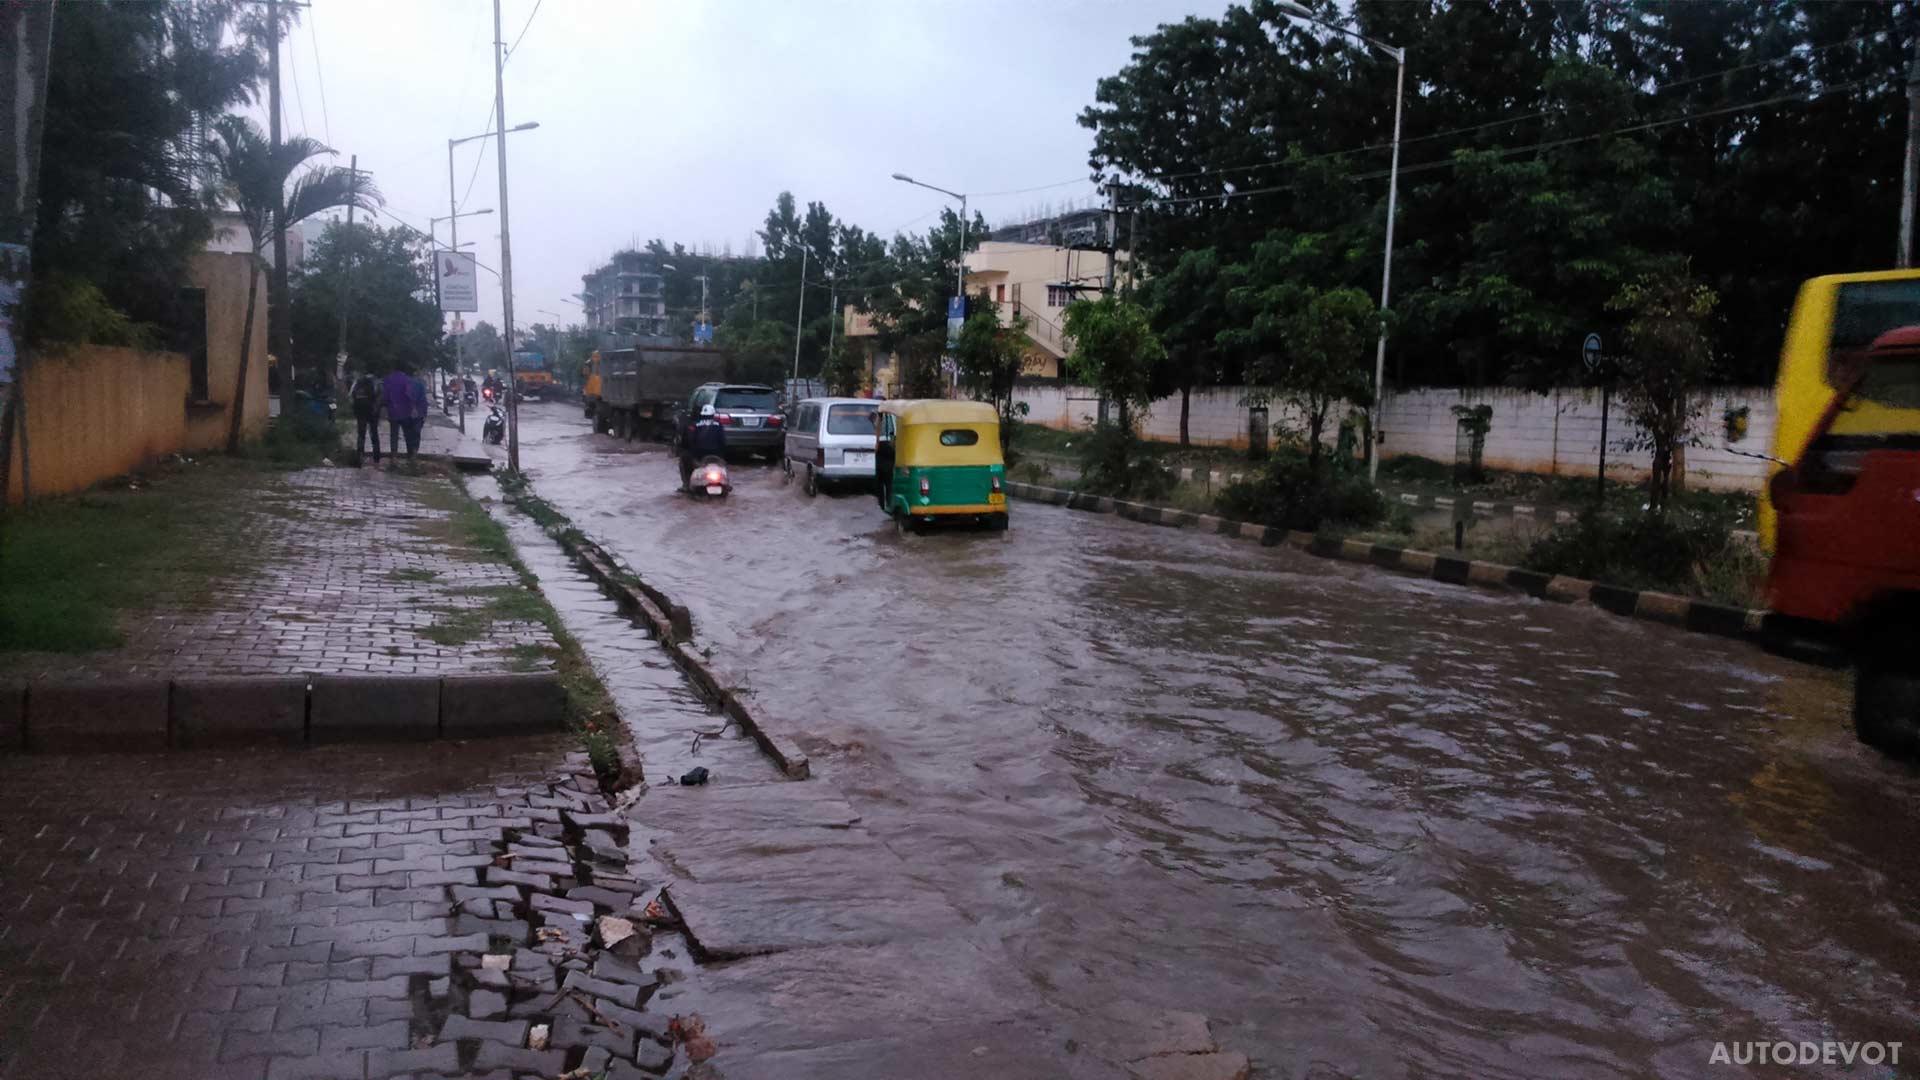 India-rains-waterlogged-Indian-roads-Road-safety-Hidden-potholes